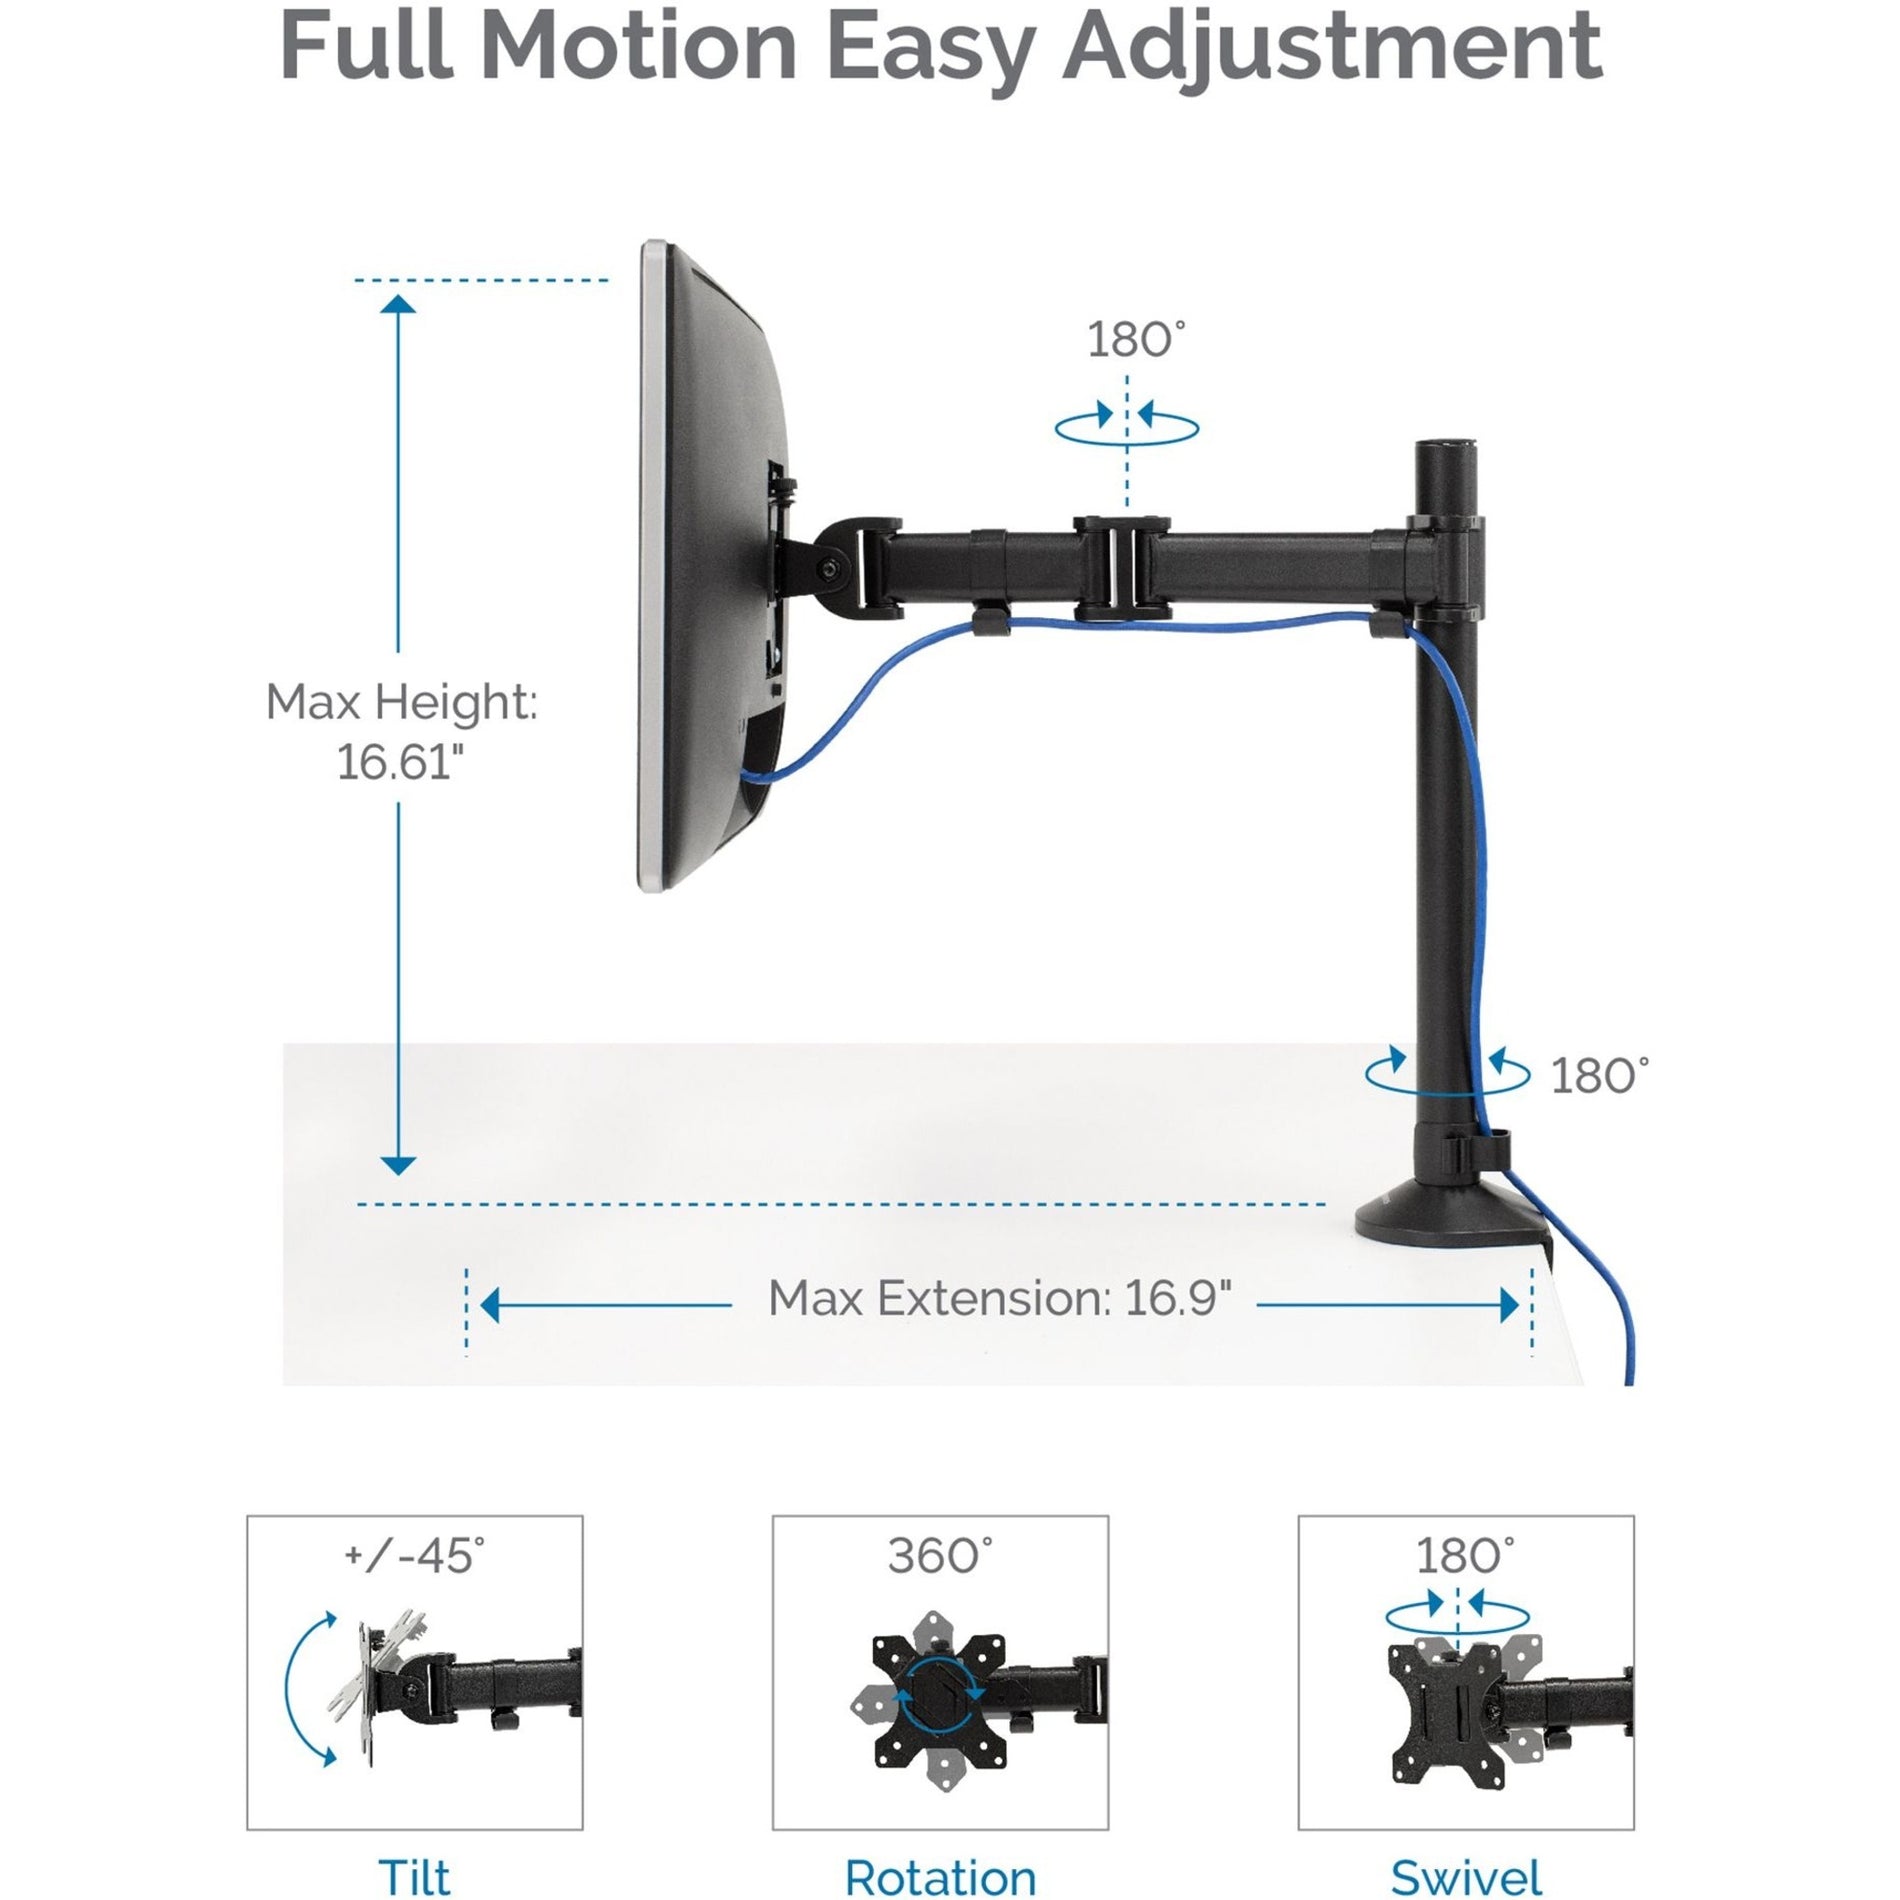 Fellowes 8502501 Reflex Single Monitor Arm, Desk Mount, 24 lb Maximum Load Capacity